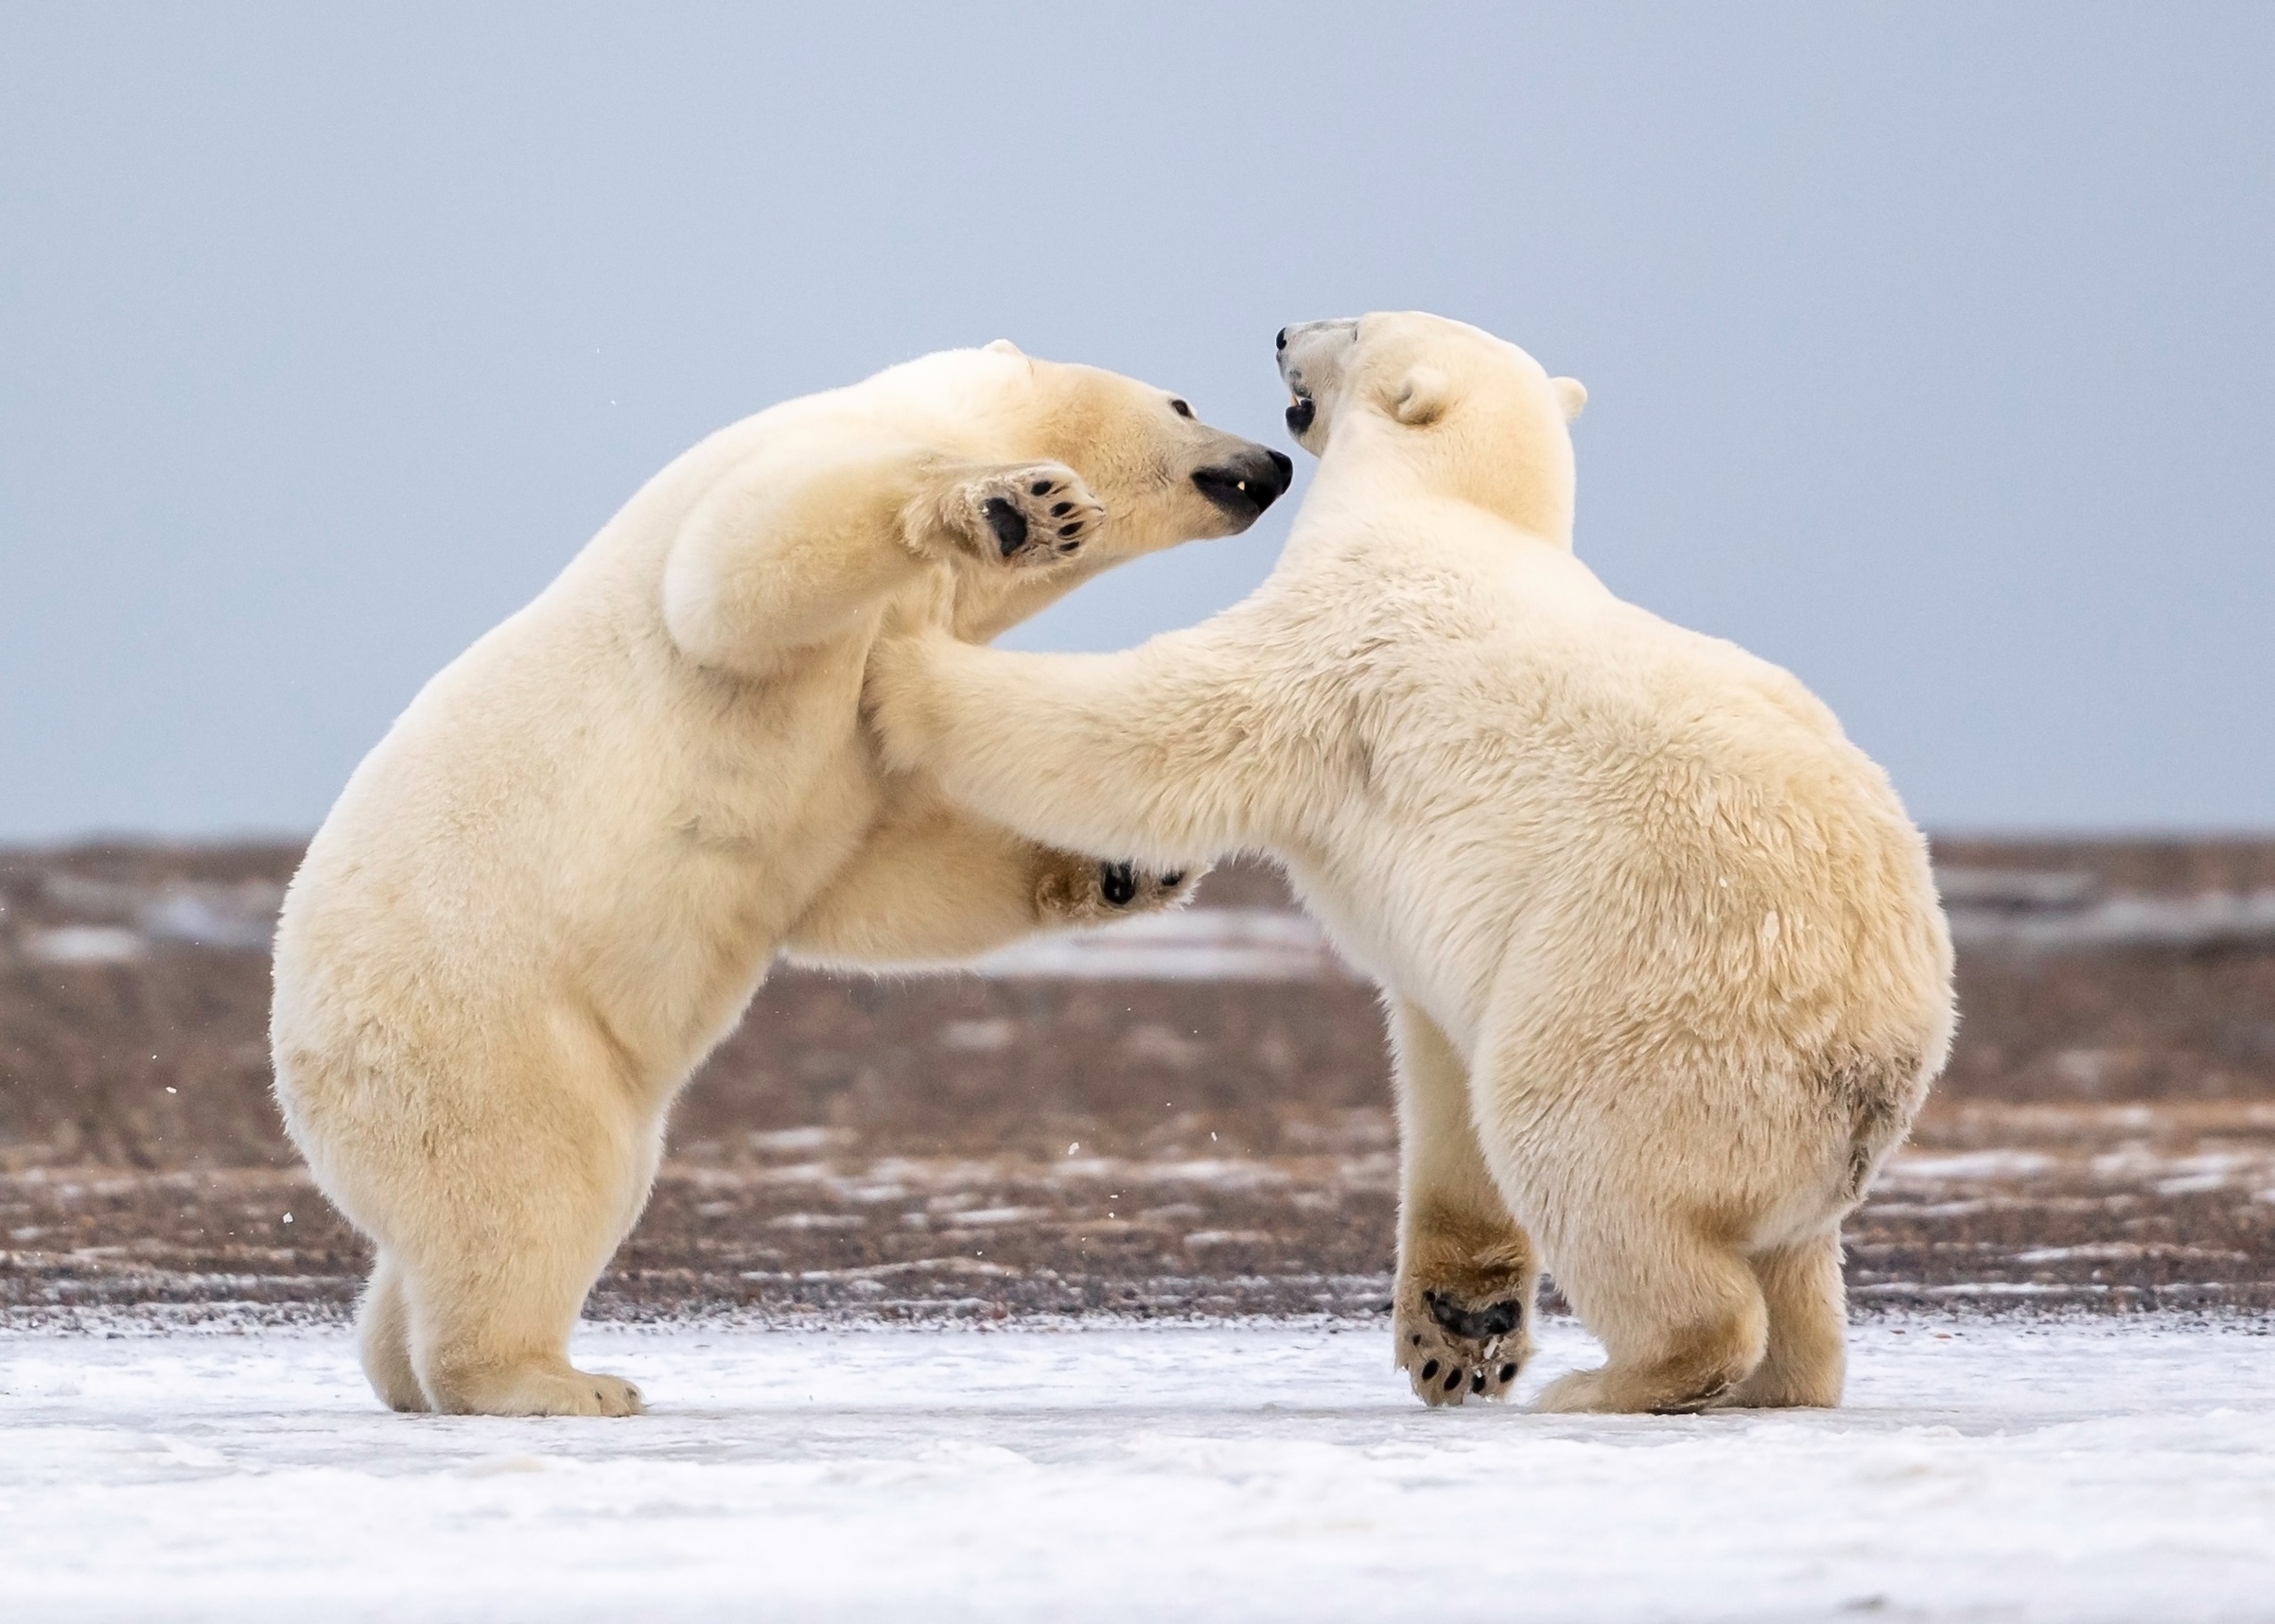 General 2560x1828 bears polar bears animals mammals